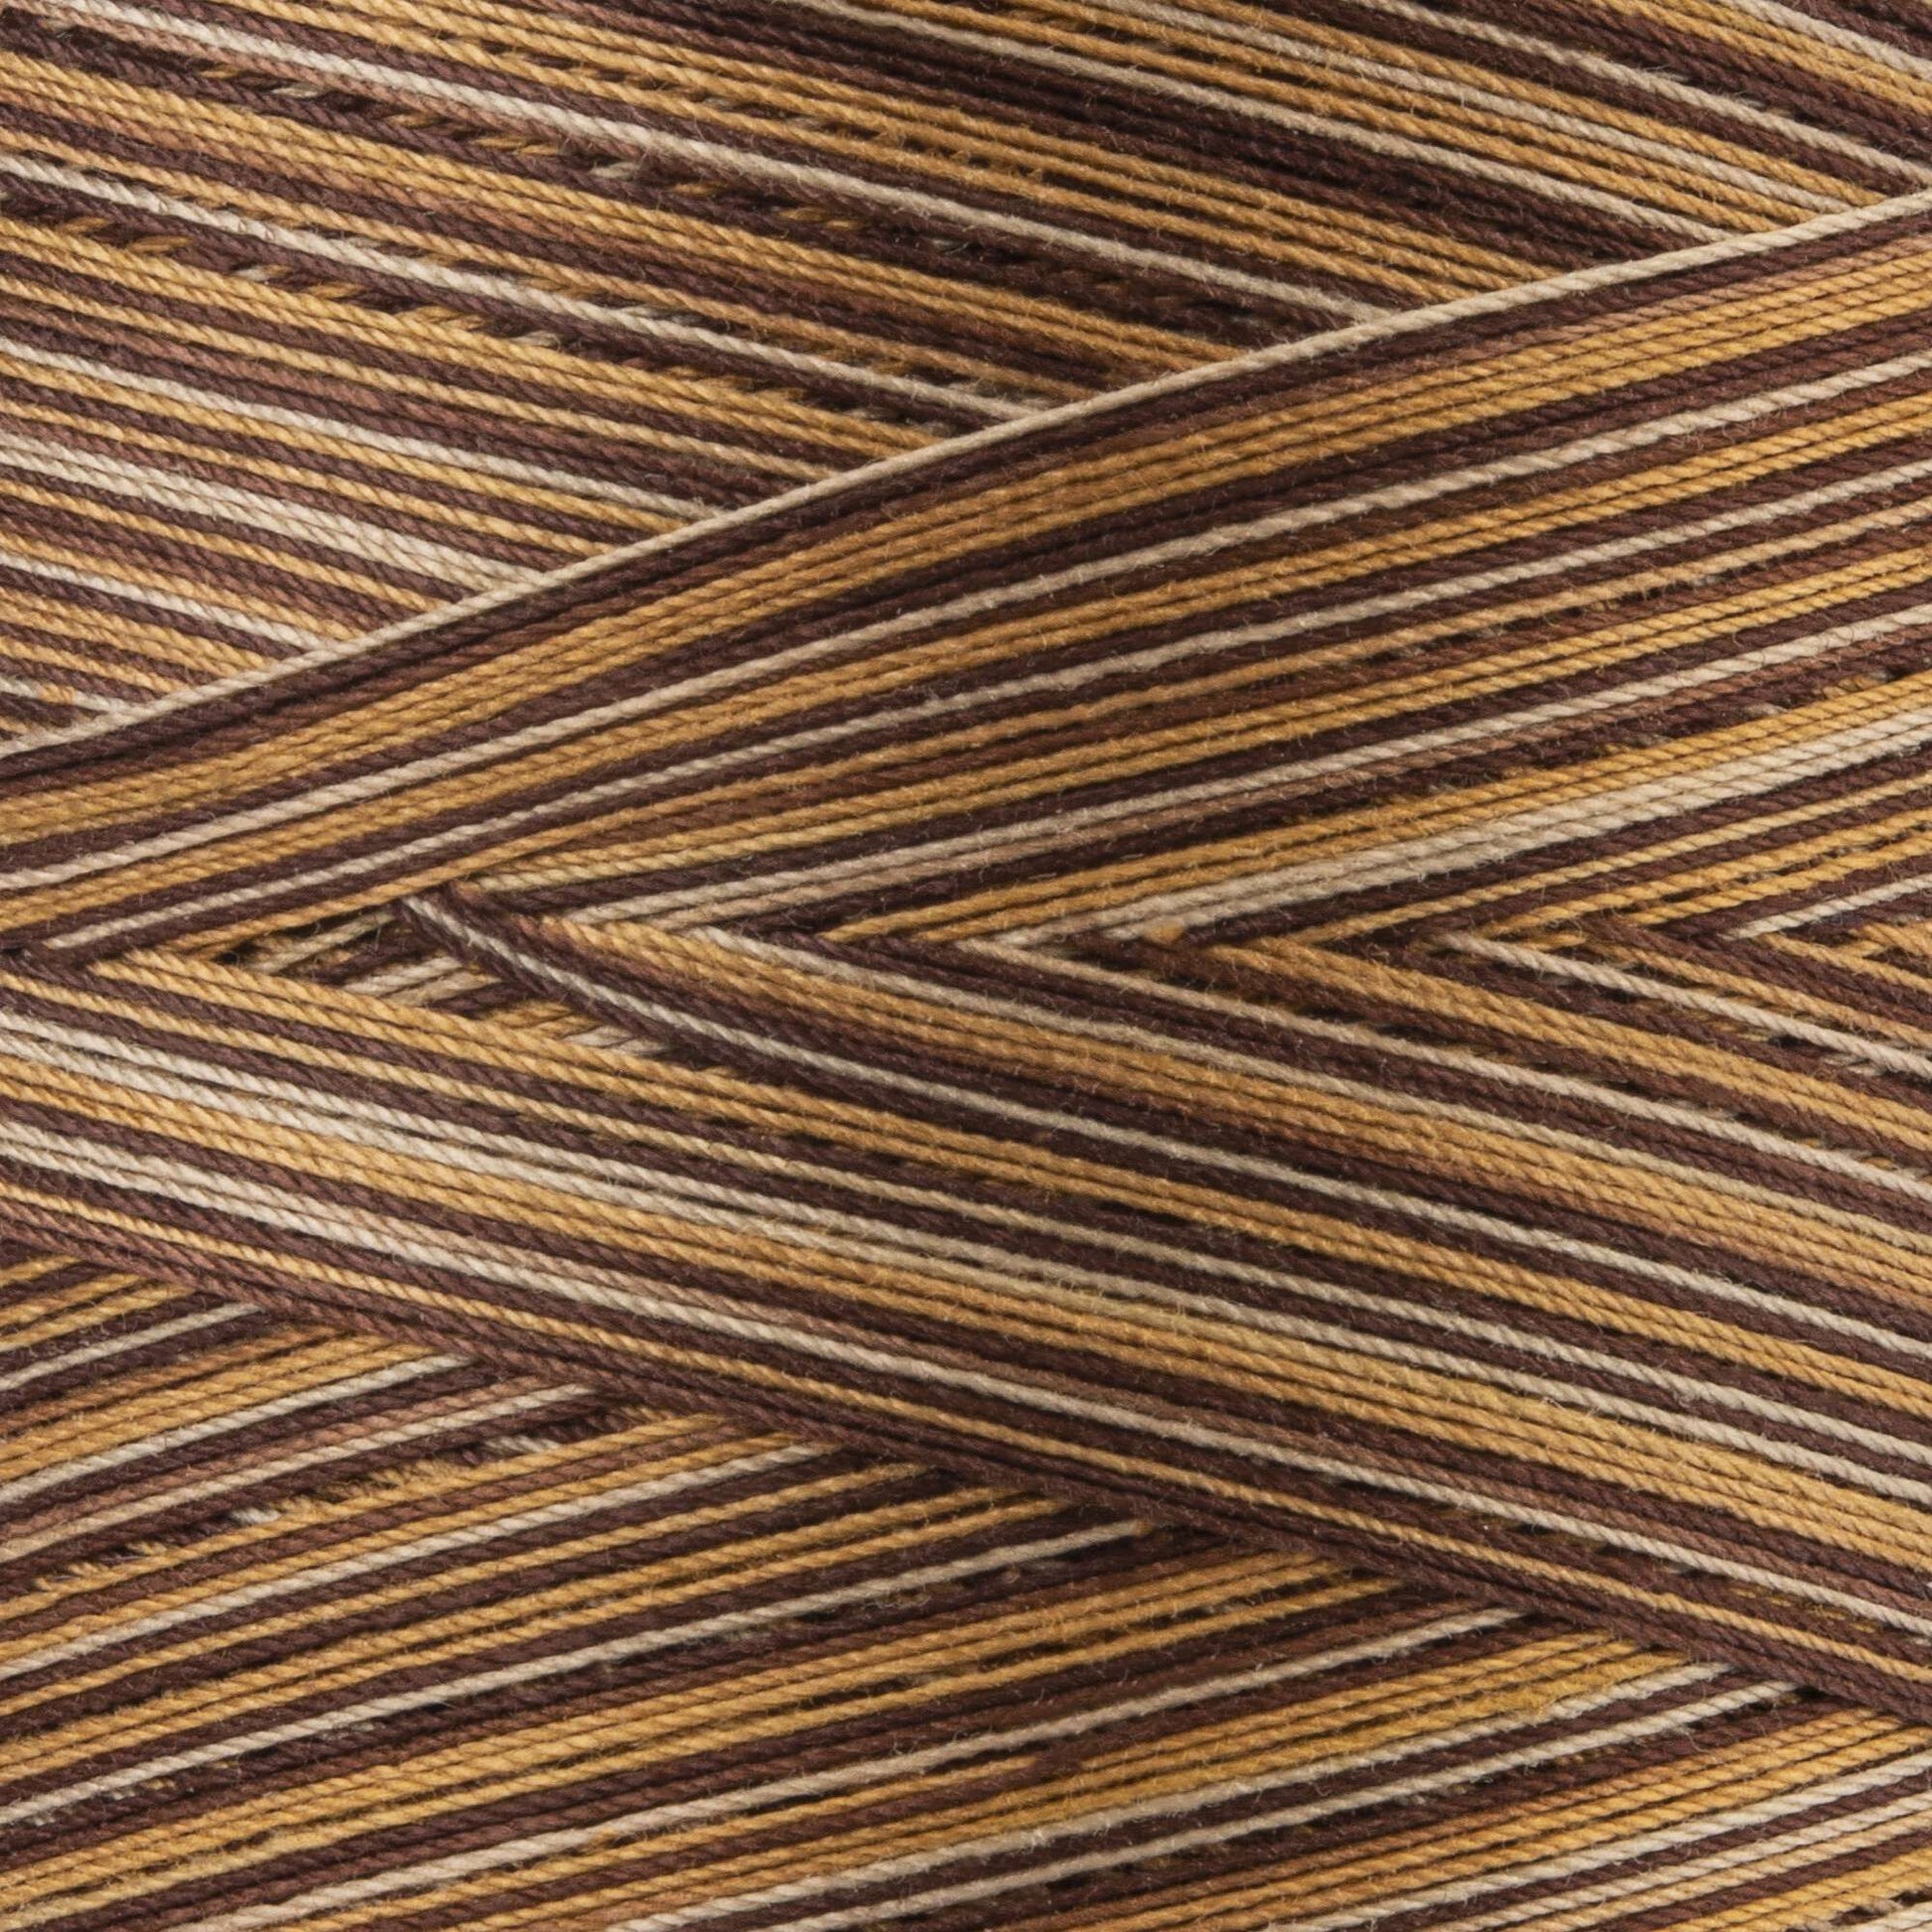 Coats & Clark Cotton Machine Quilting Multicolor Thread (1200 Yards) Chocolate Swirl